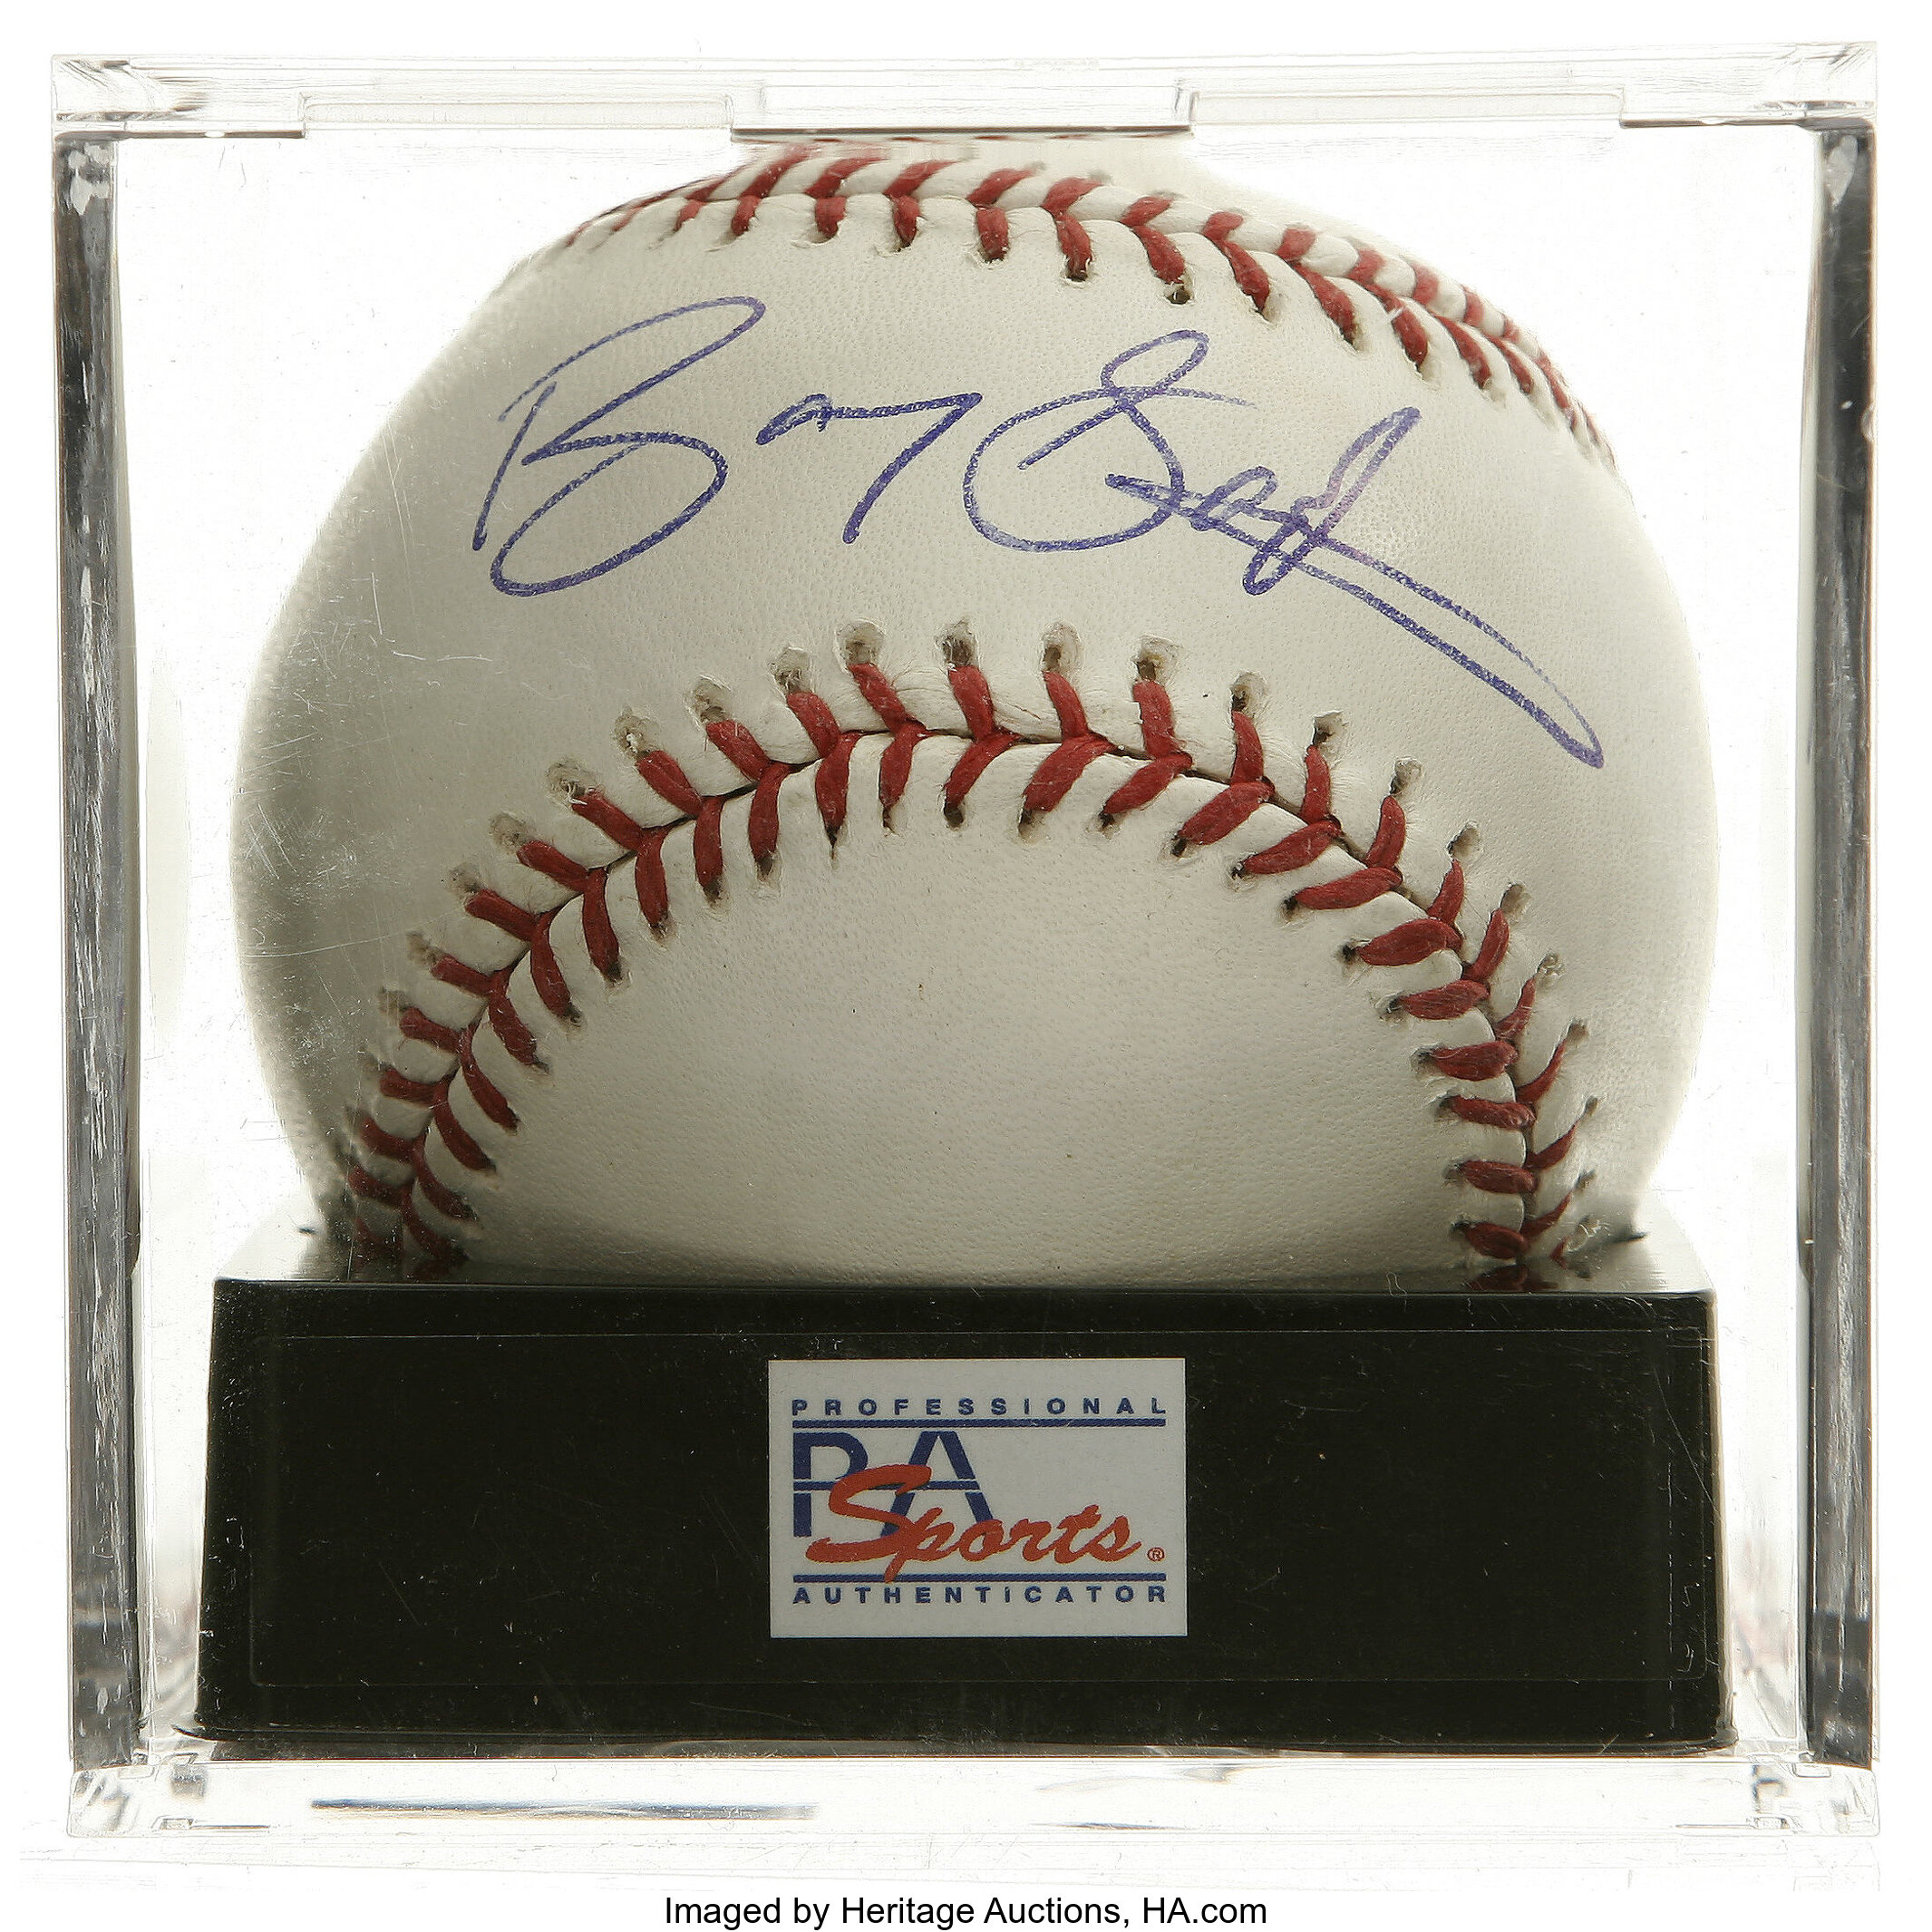 Barry Sanders Single Signed Baseball, PSA Mint 9. Amazingly